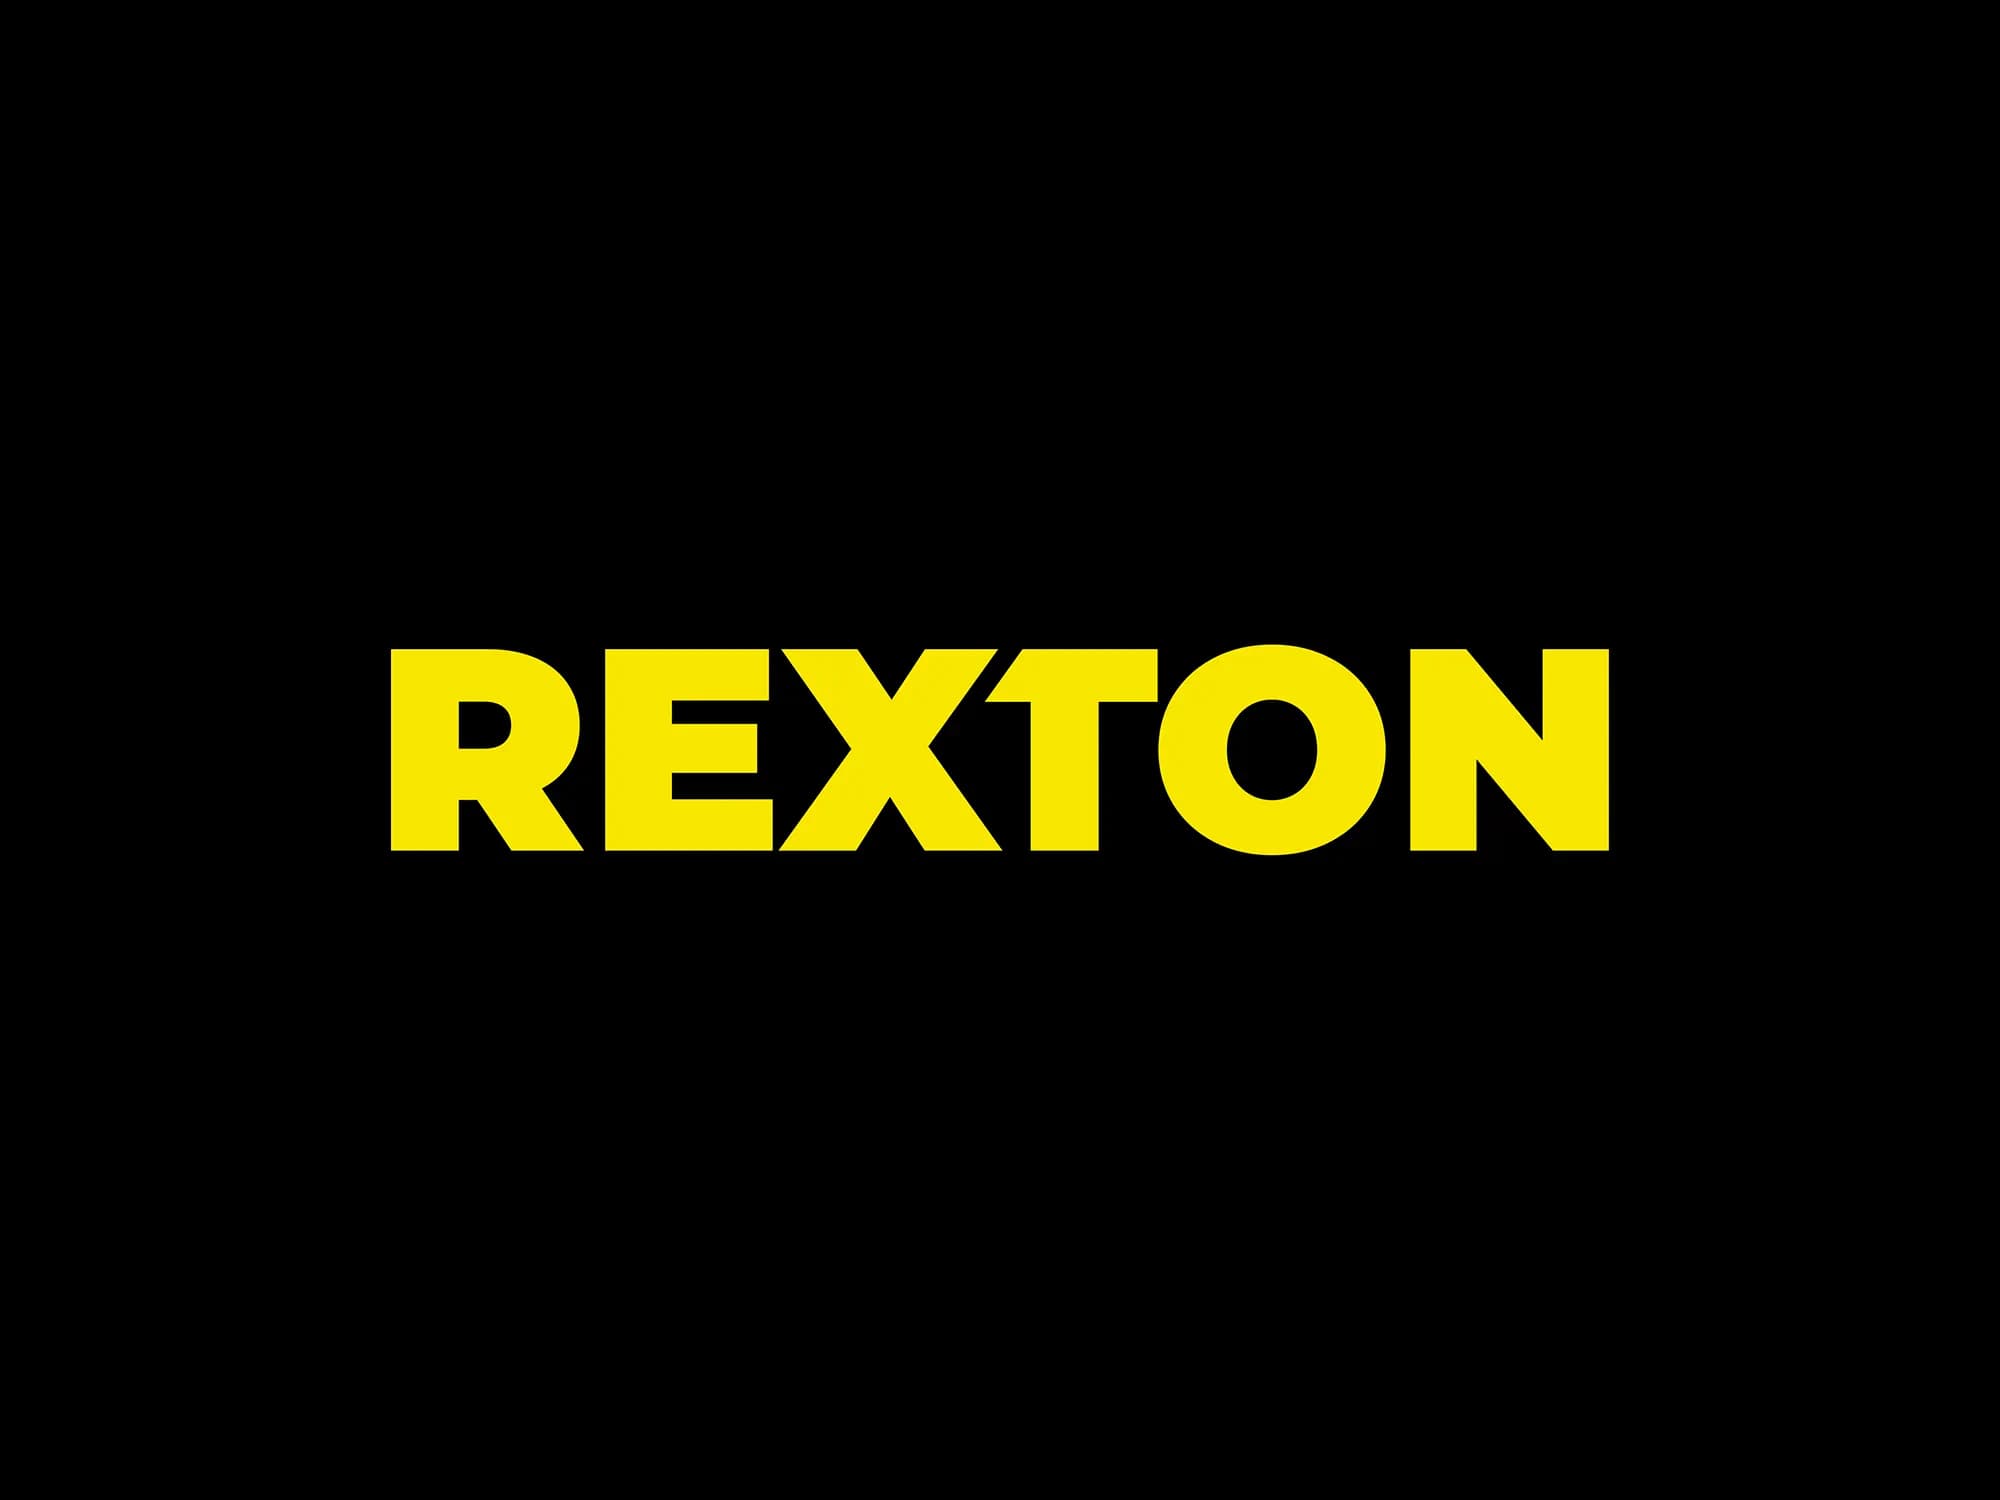 Rexton hearing aids logo